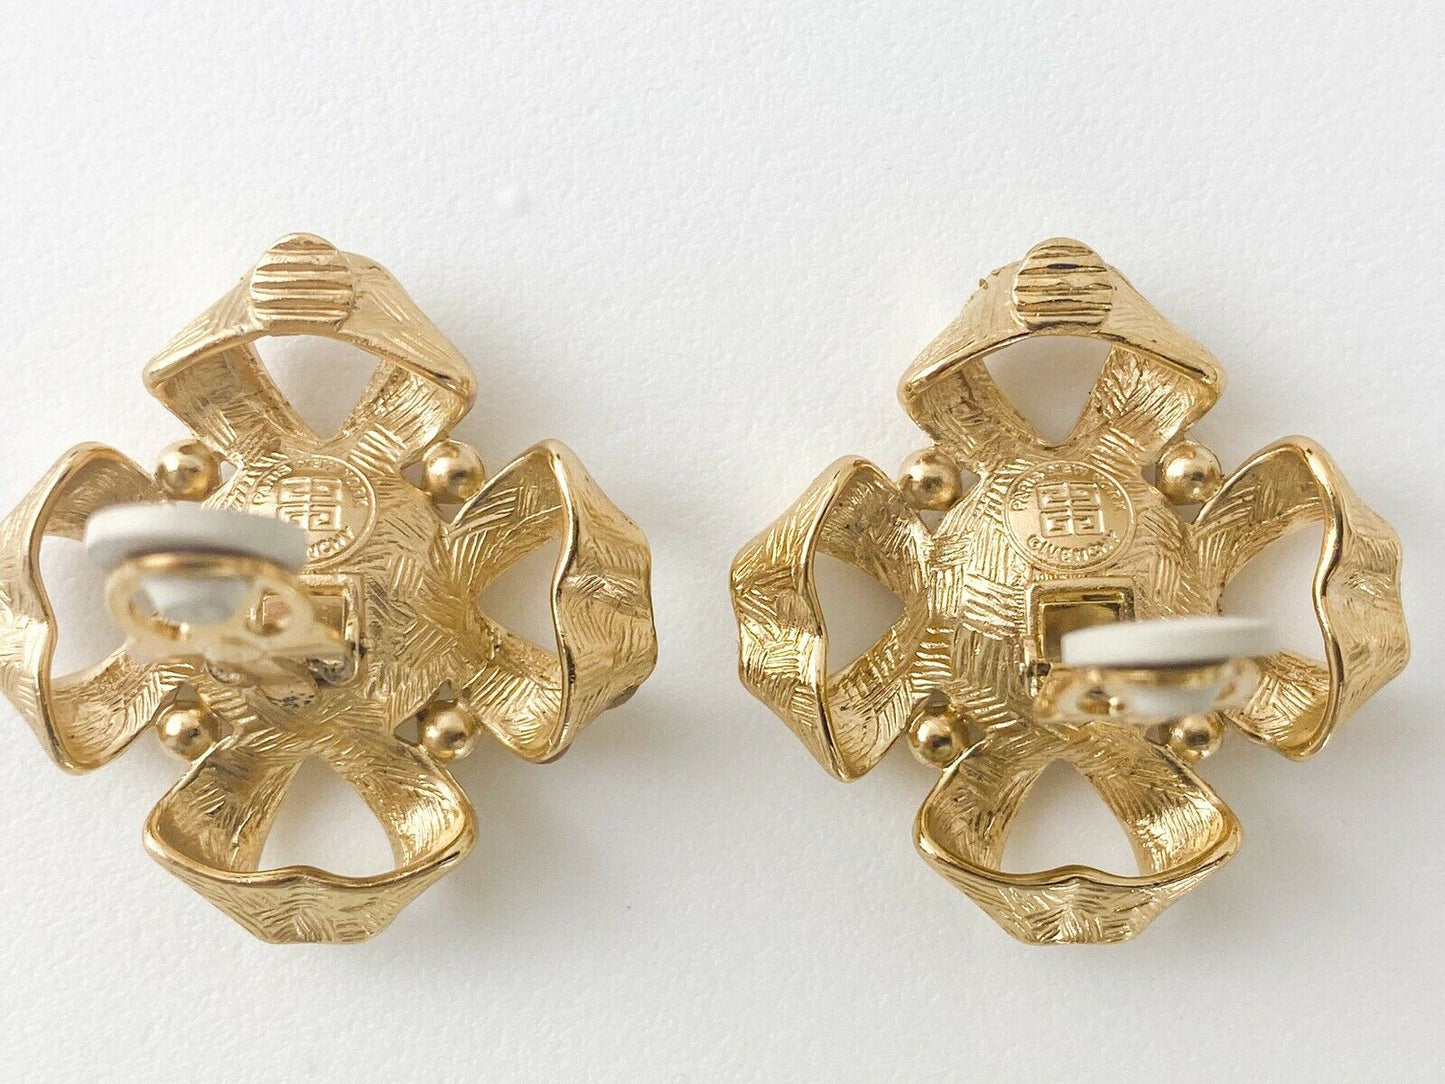 Givenchy Paris New York Vintage Gold Tone Earrings Crystal Rhinestone